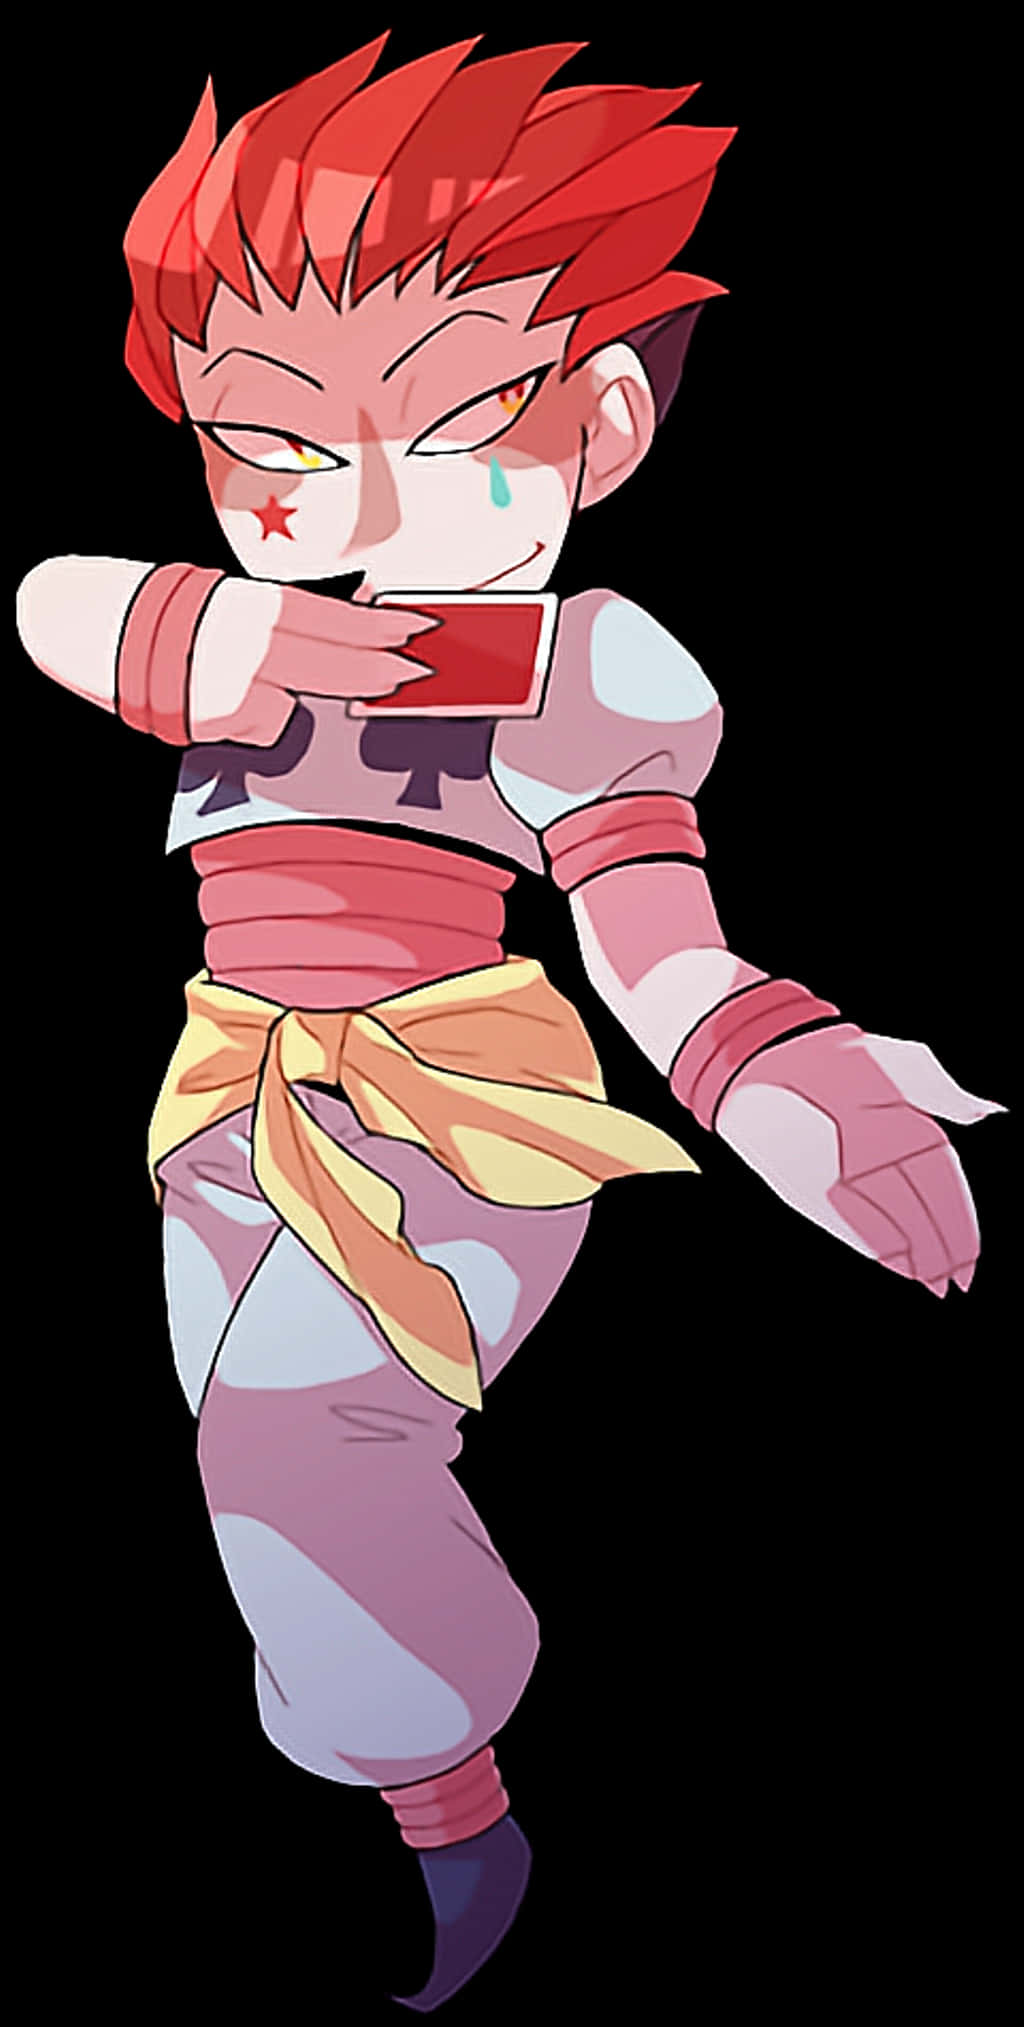 Hisoka Magician Anime Character PNG image